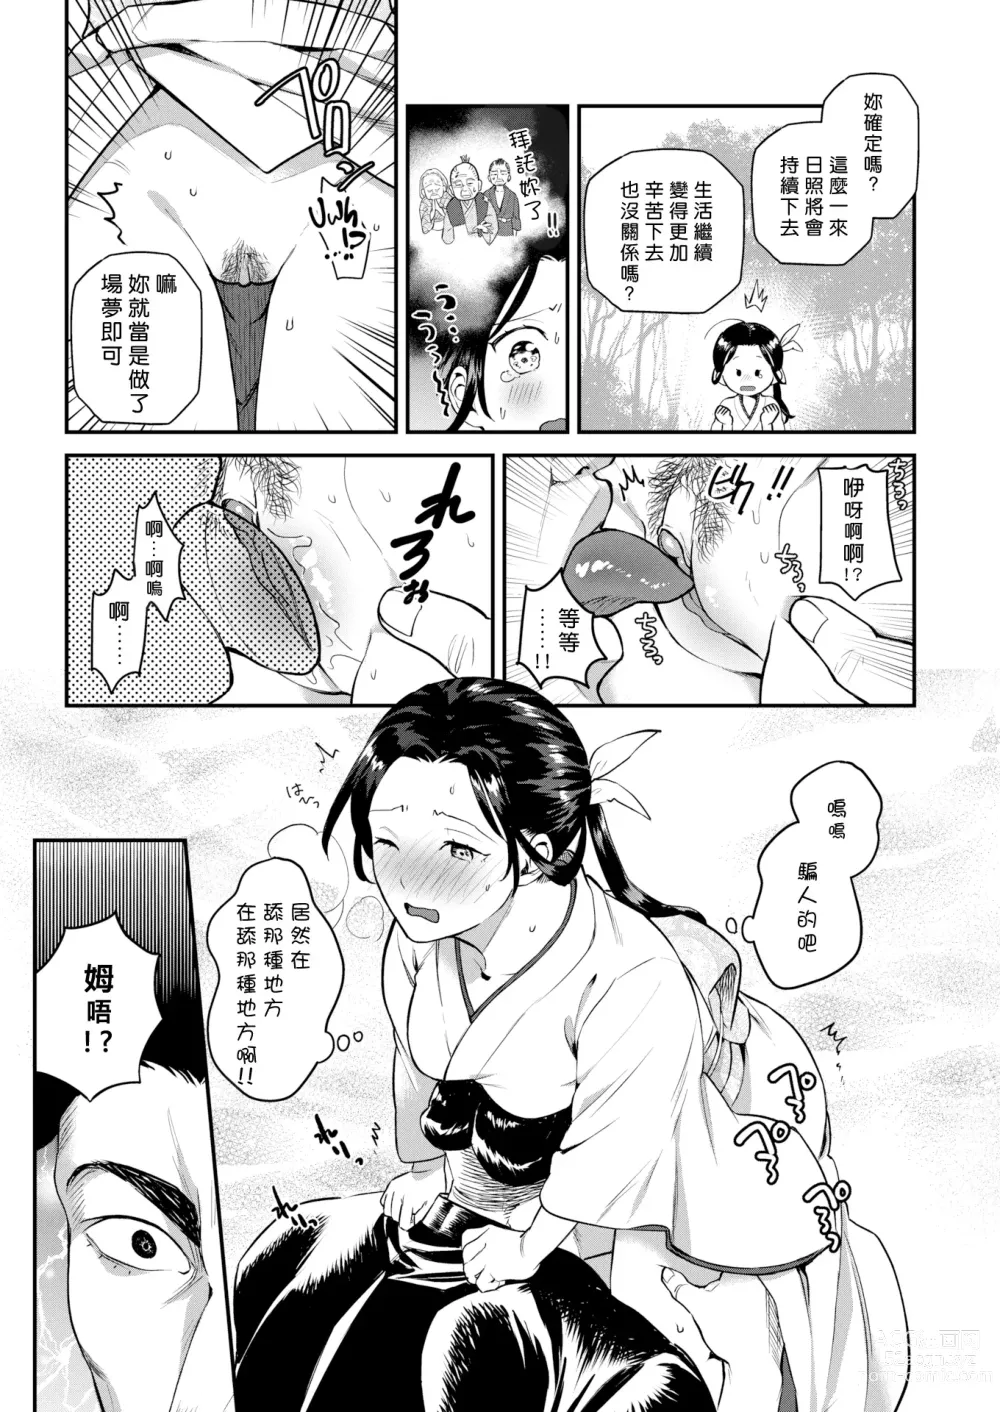 Page 9 of doujinshi 『雨乞い乙女』